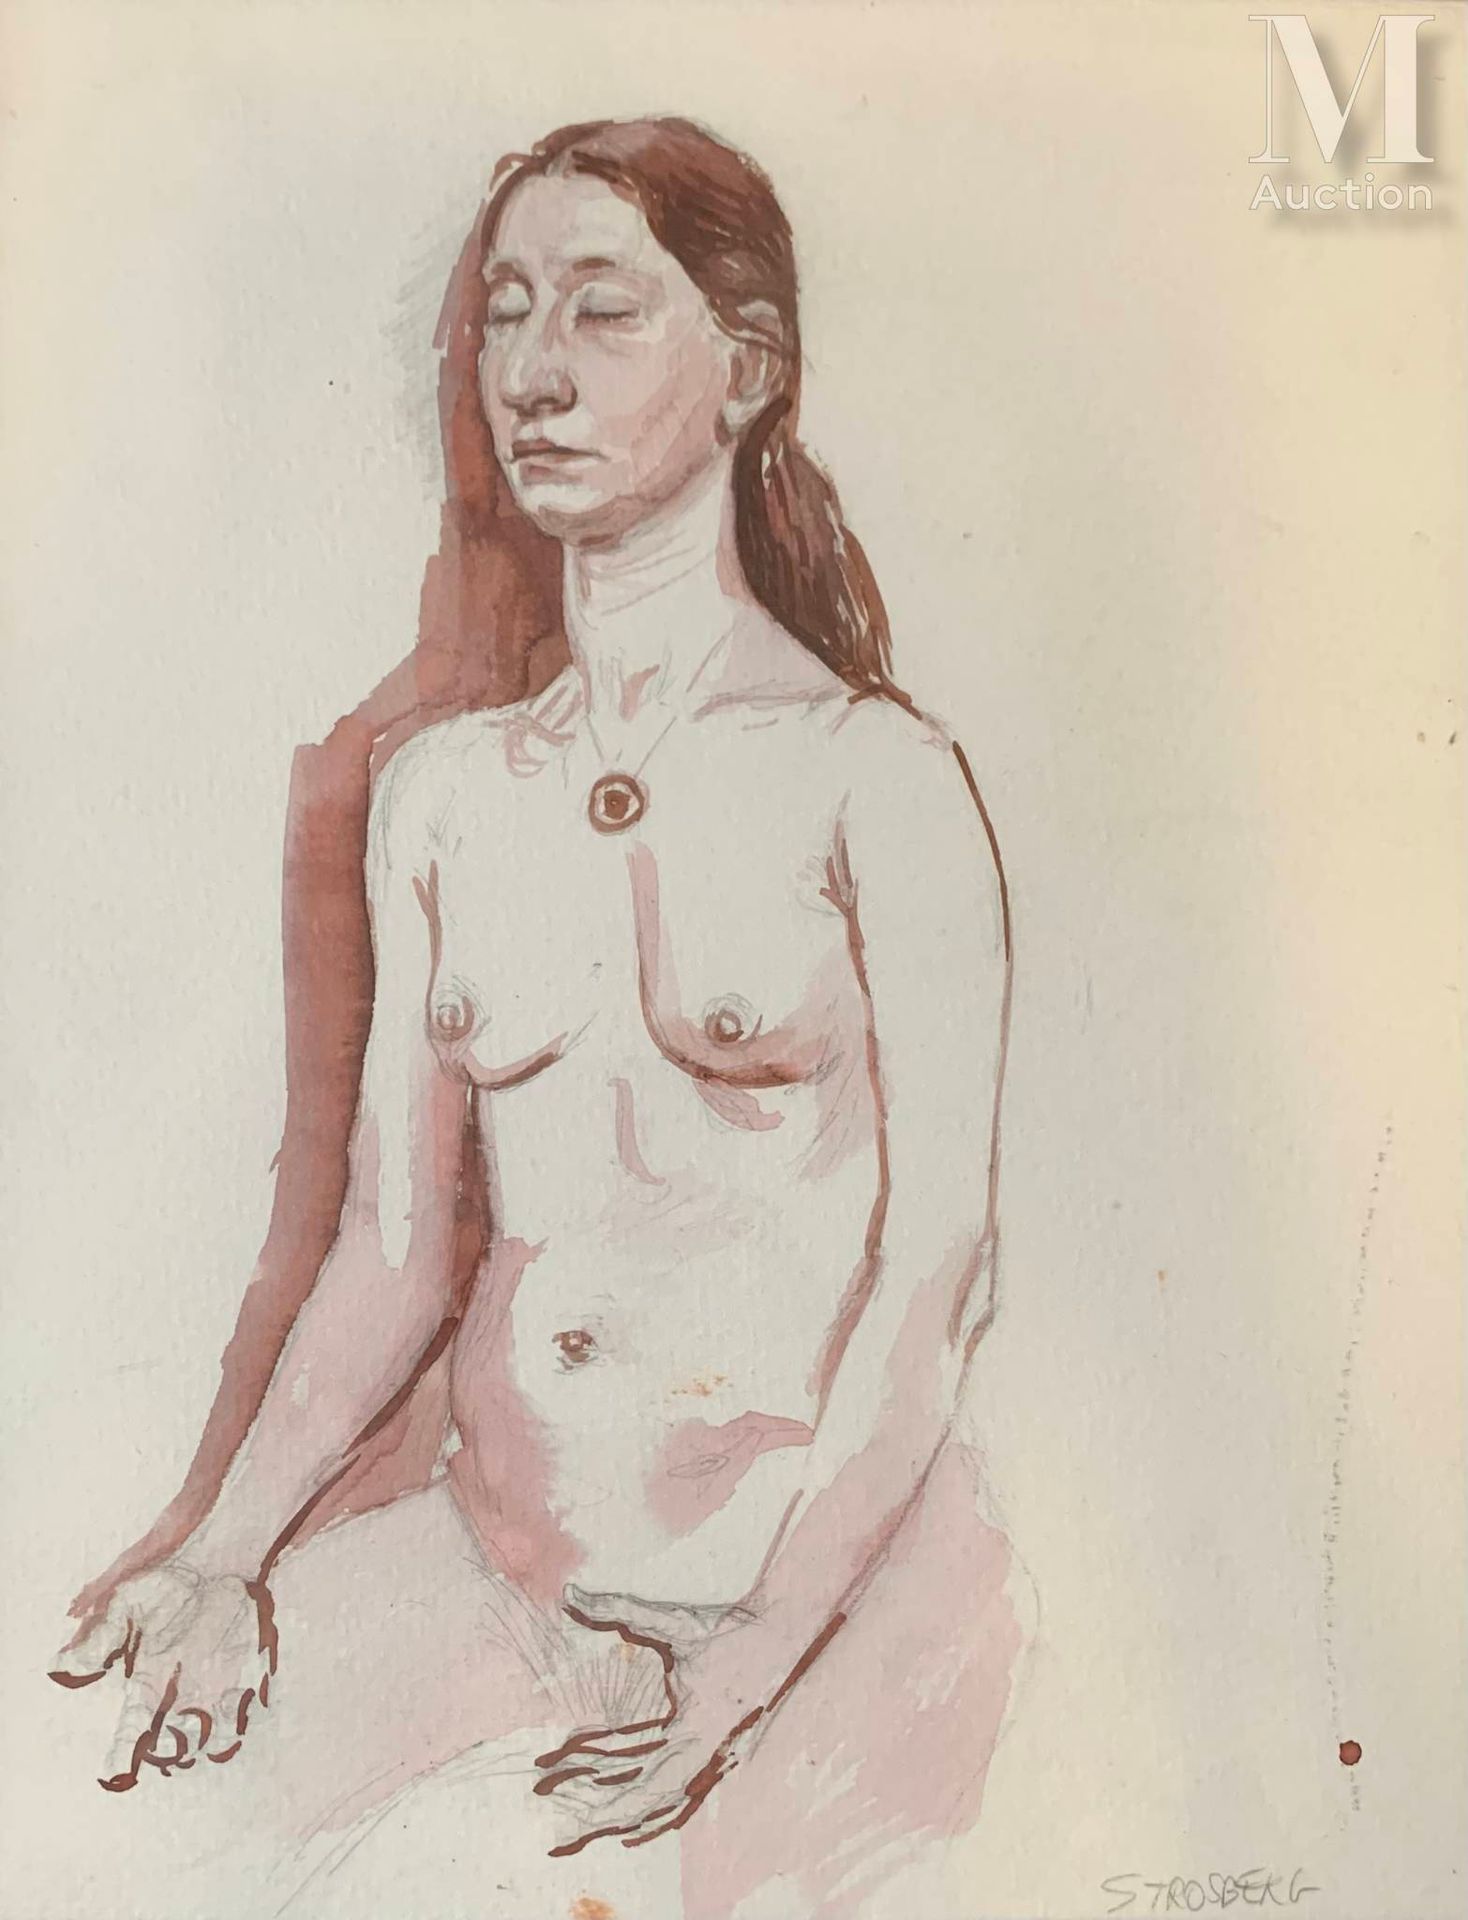 Serge STROSBERG (1966) 冥想中的裸体女人

纸上素描和水彩画
右下方有签名
29 x 23 cm